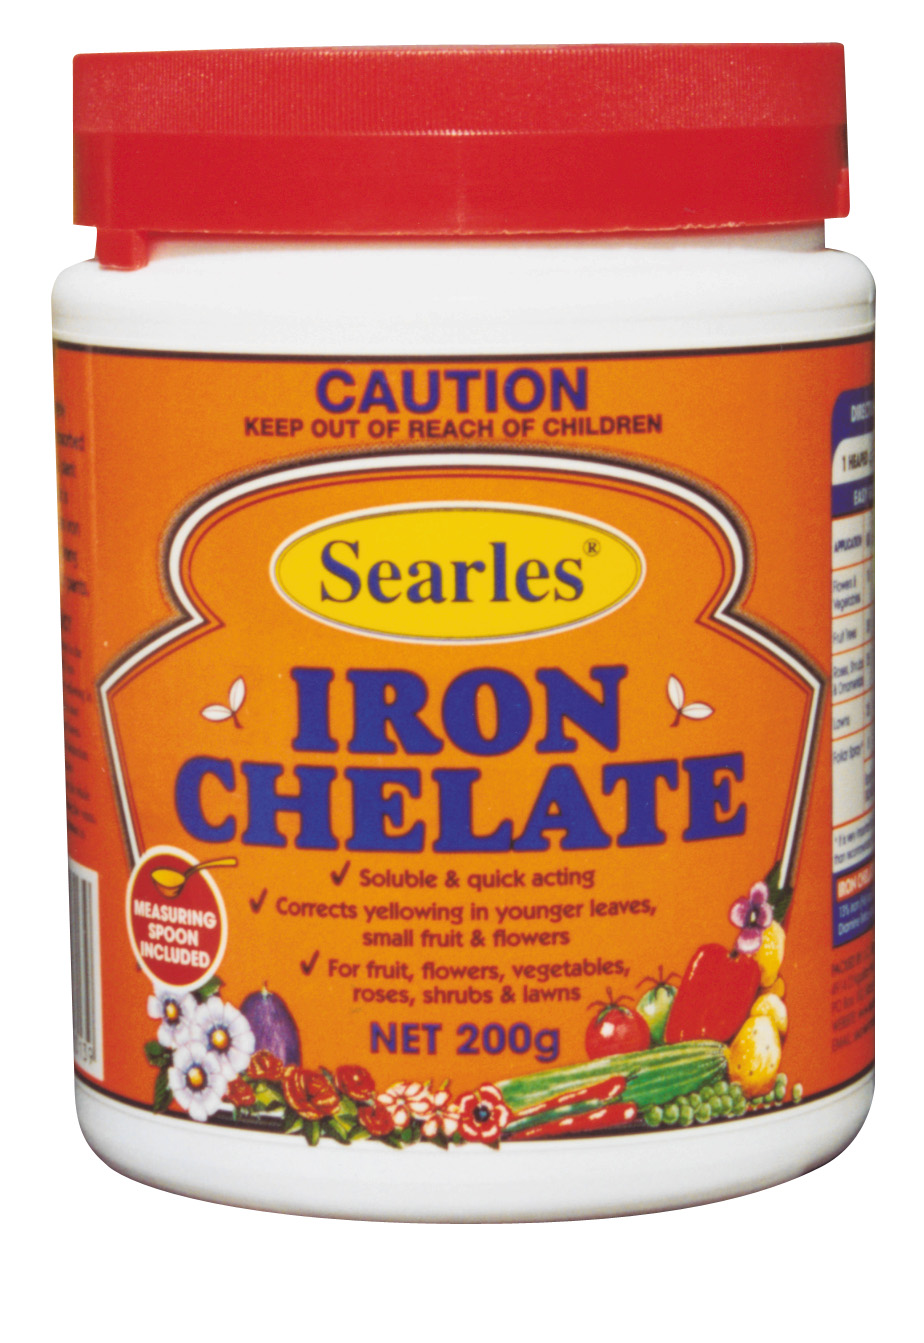 Searles Iron Chelates 200g